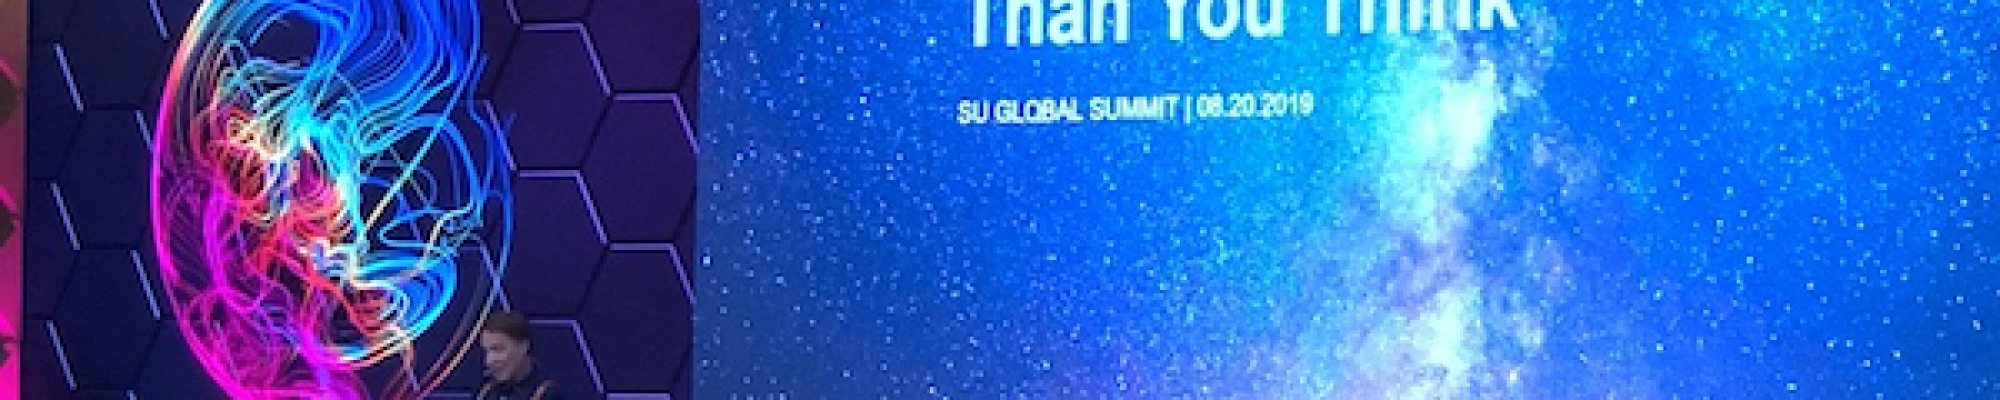 SUGlobal Summit